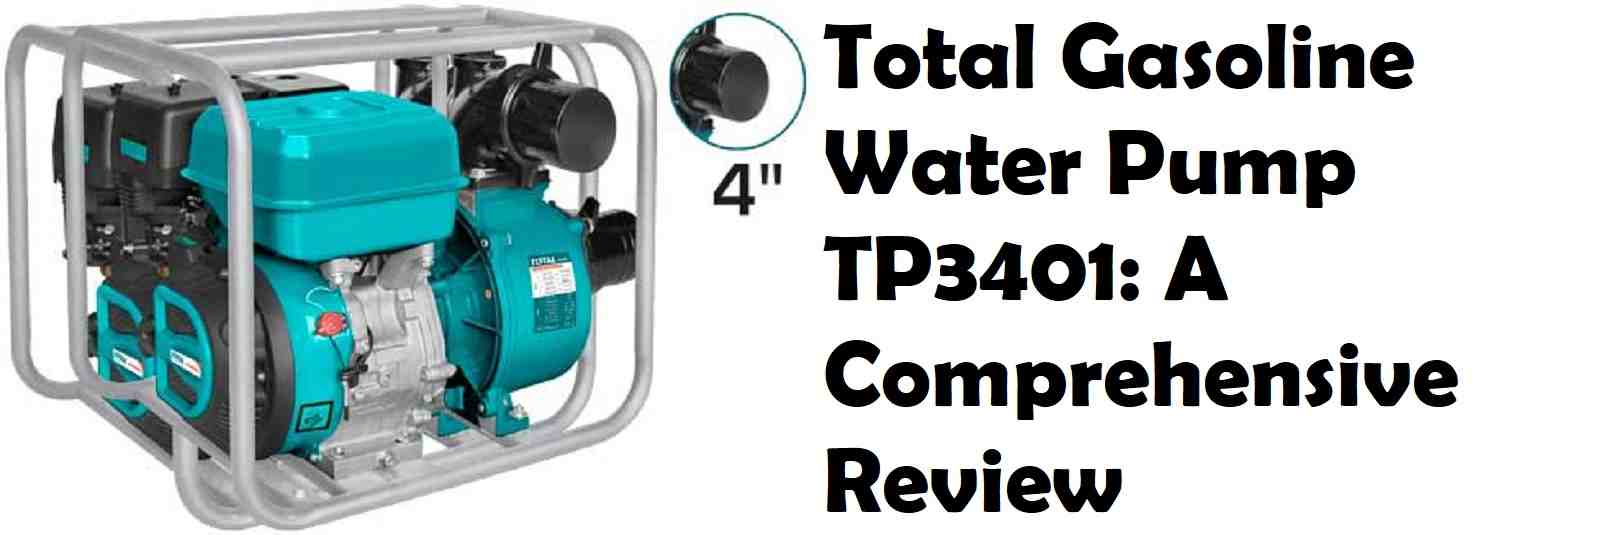 Gasoline Water Pump TP3401 Total